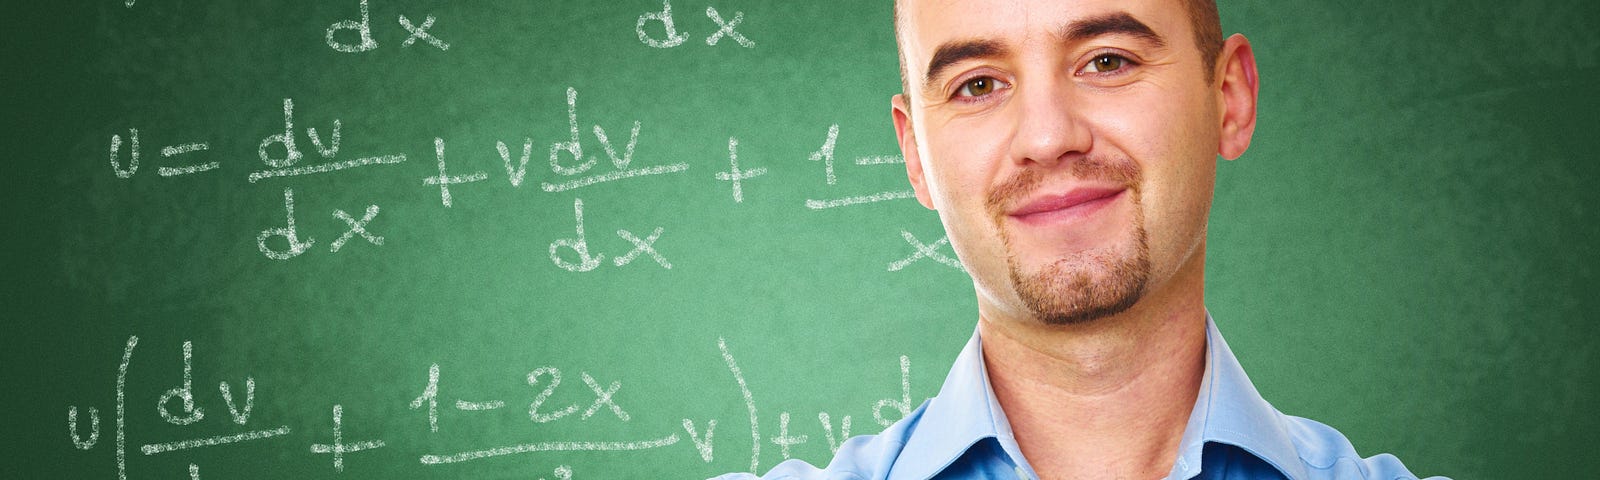 confident math teacher and classic chalkboard background